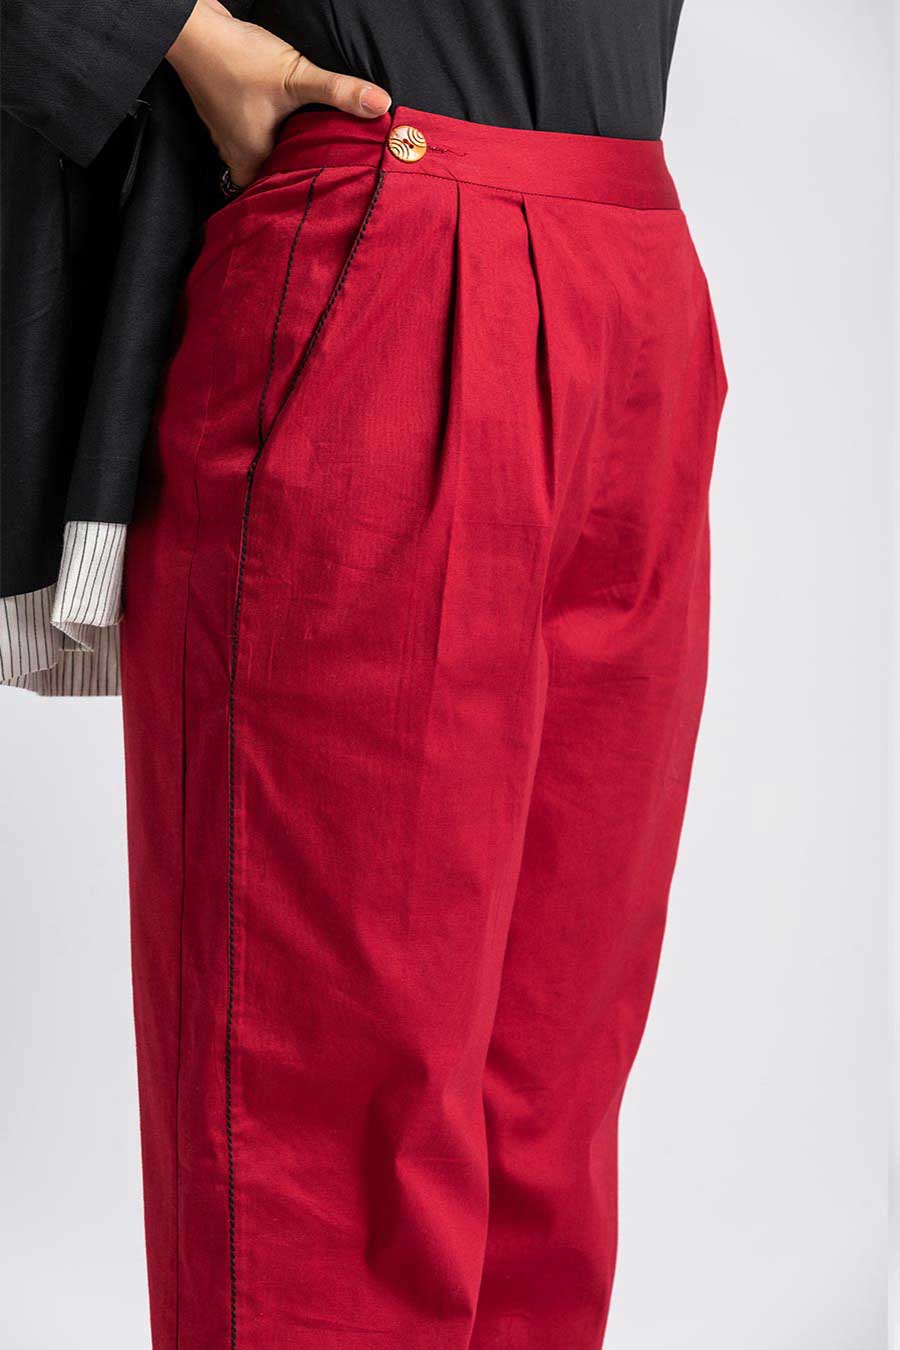 Valiant Red Cotton Lycra Pants